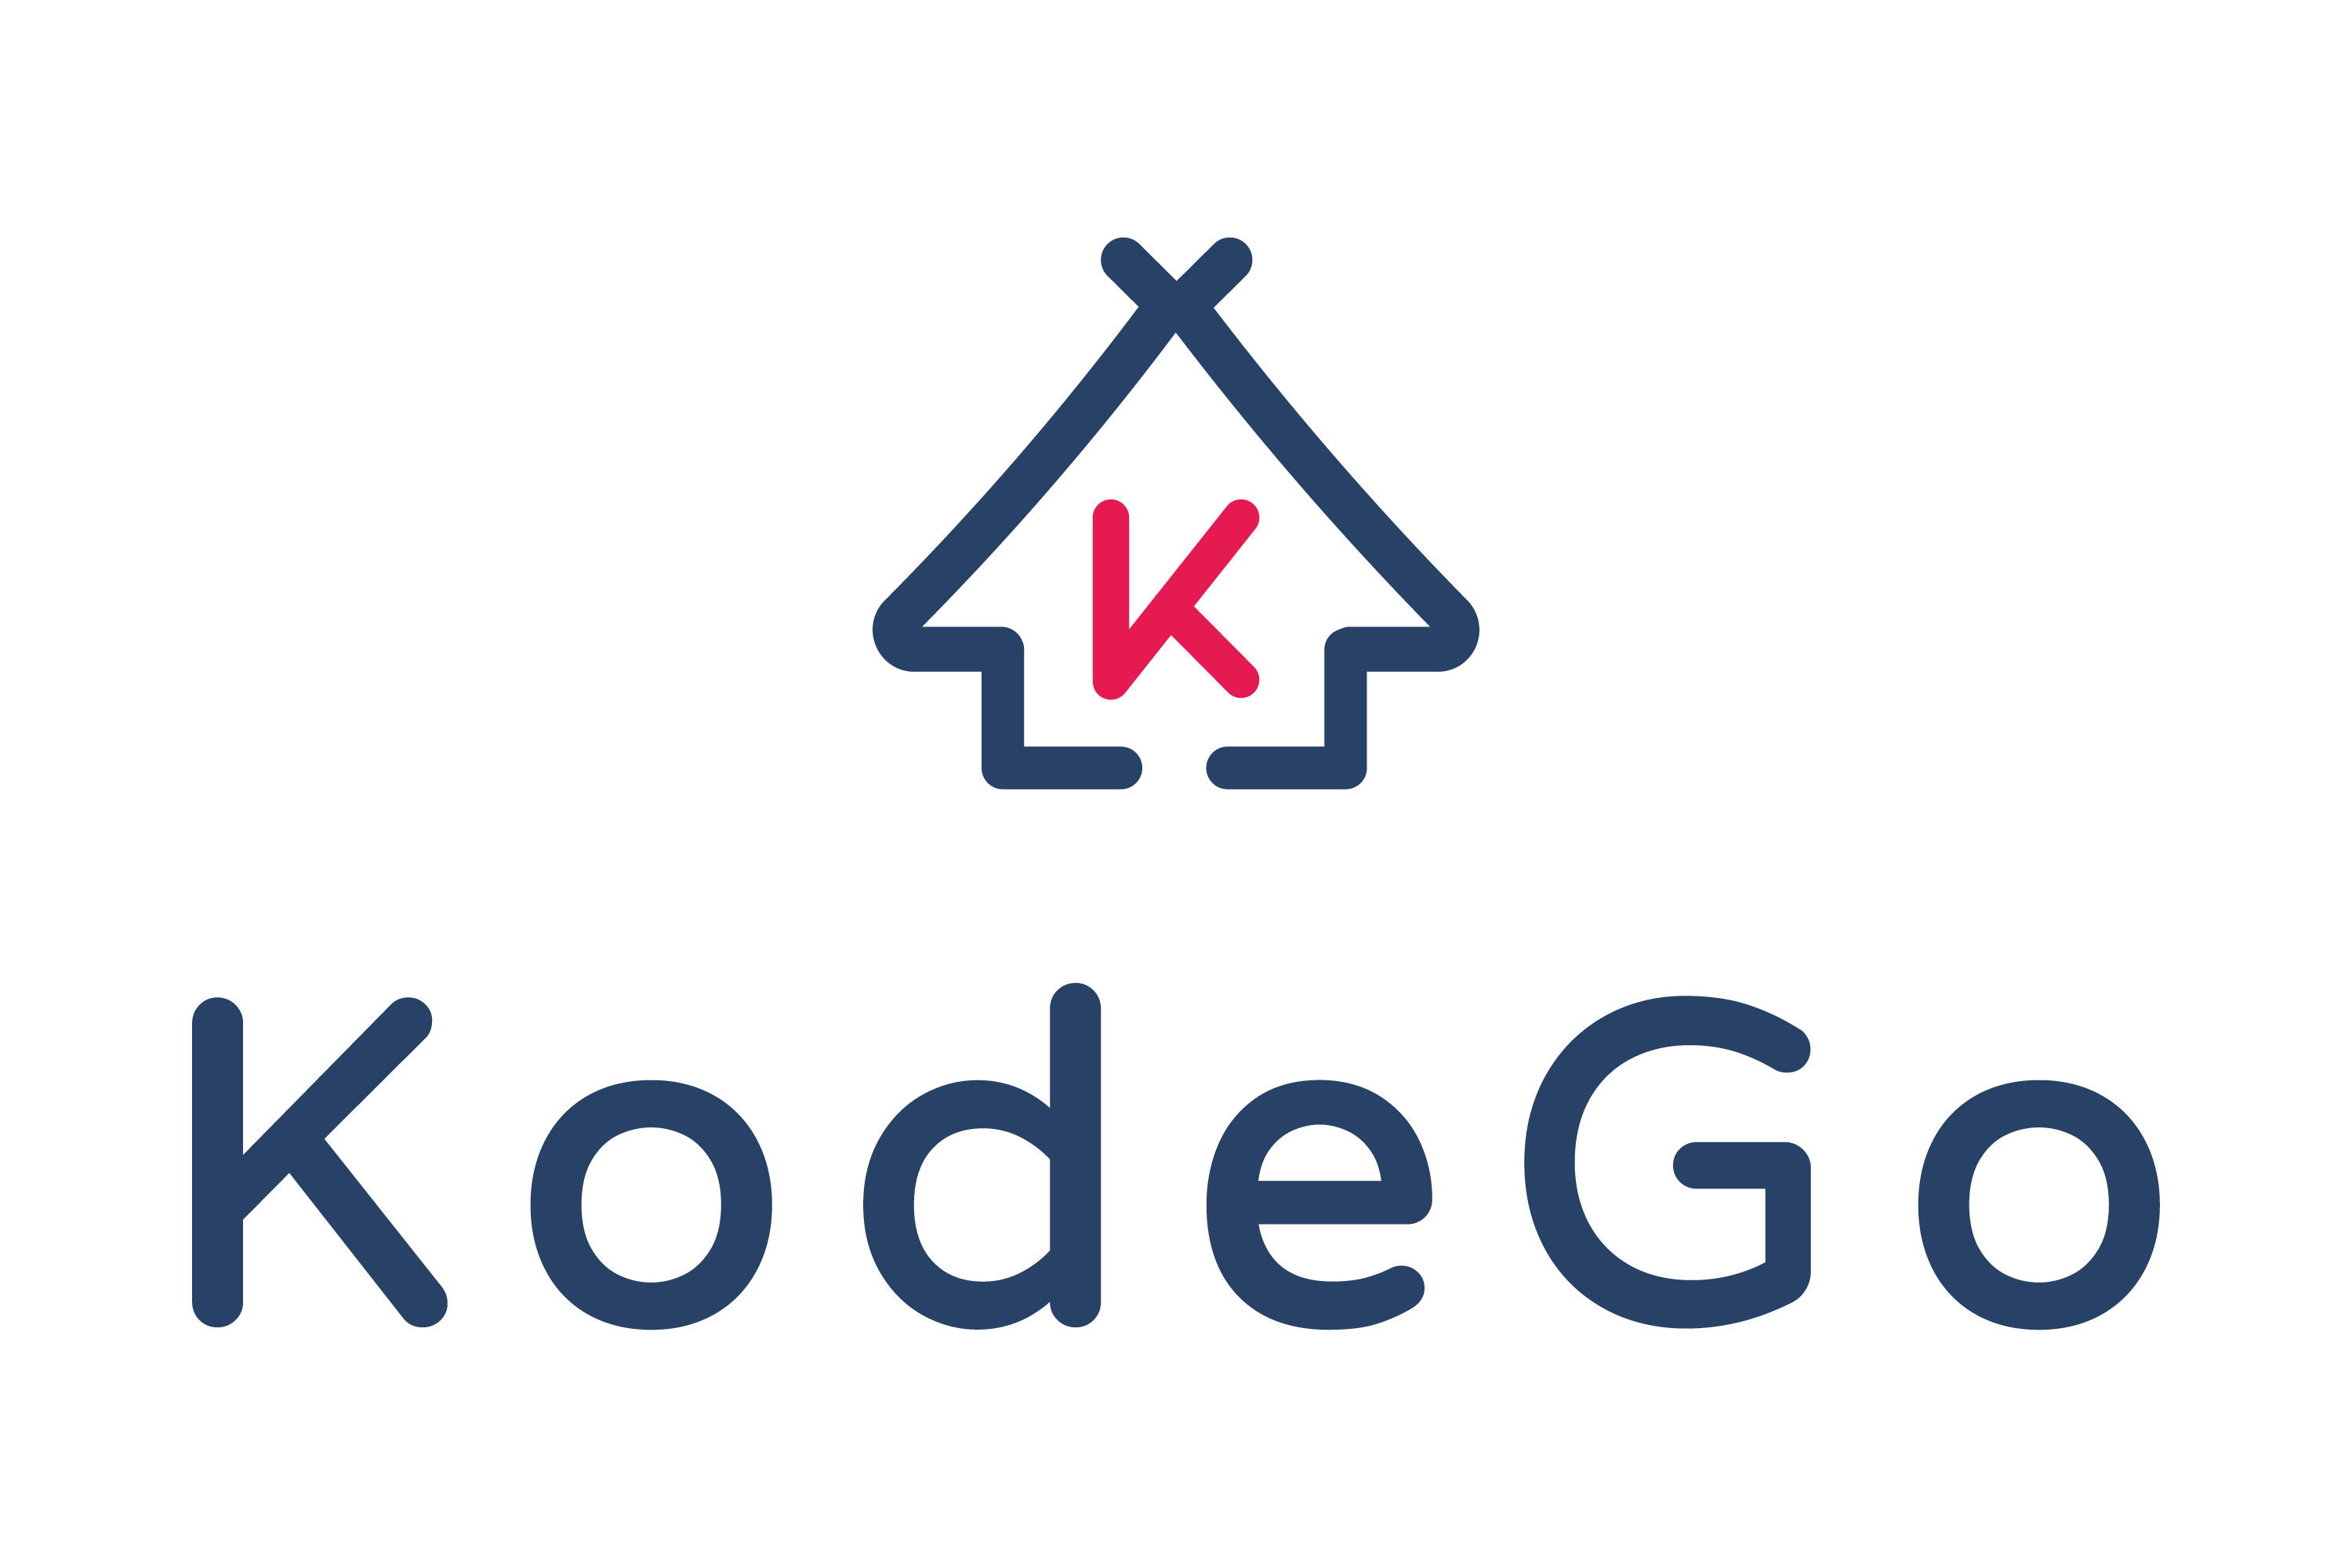 kodigo-logo-vertical-variation.png